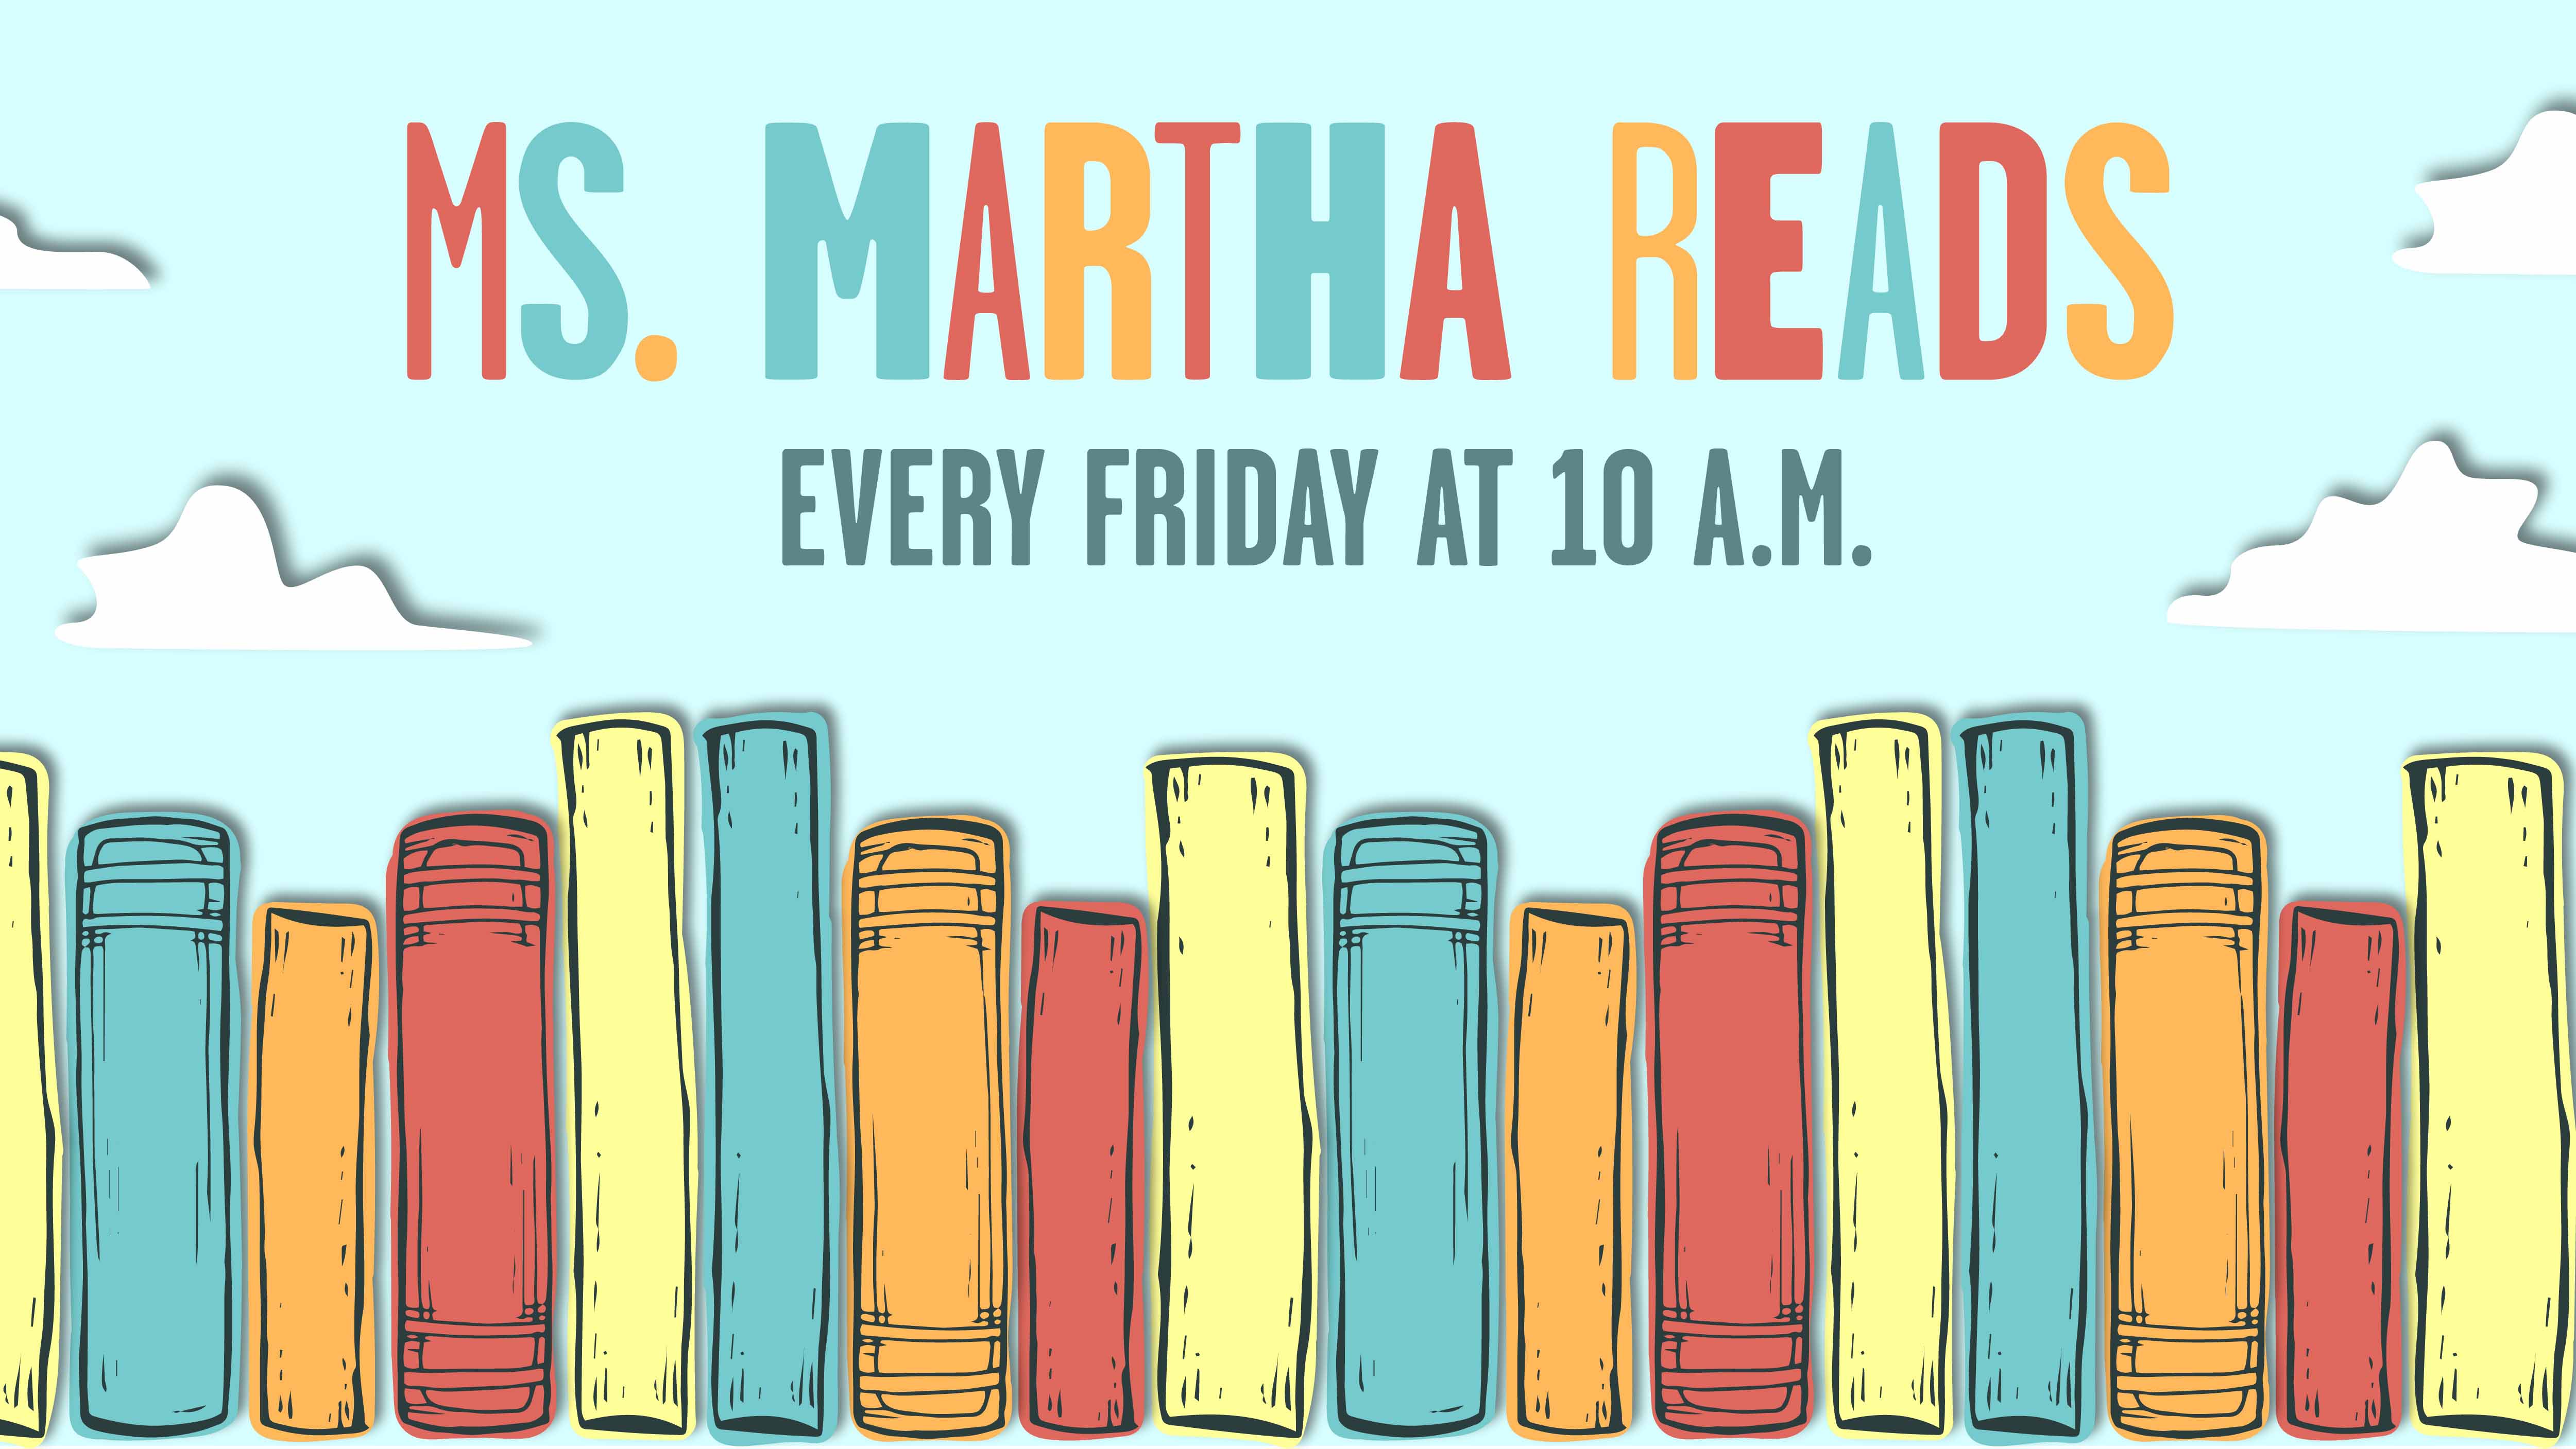 Ms. Martha Reads